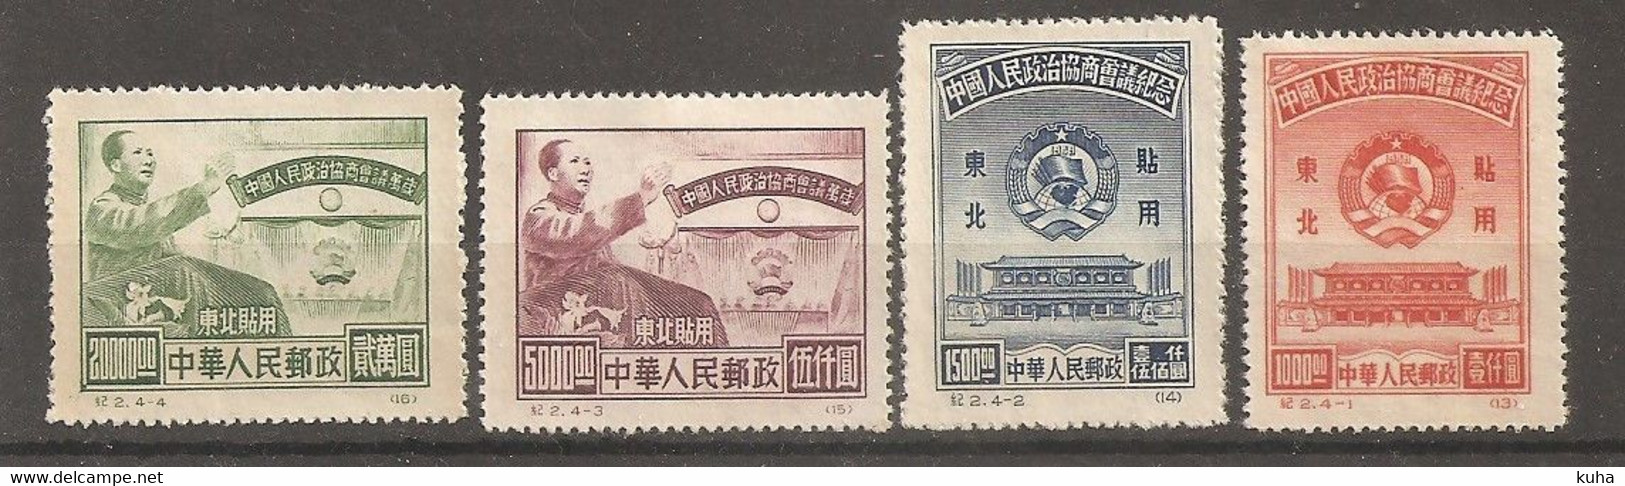 China Chine 1950 North China MNH - Chine Du Nord 1949-50